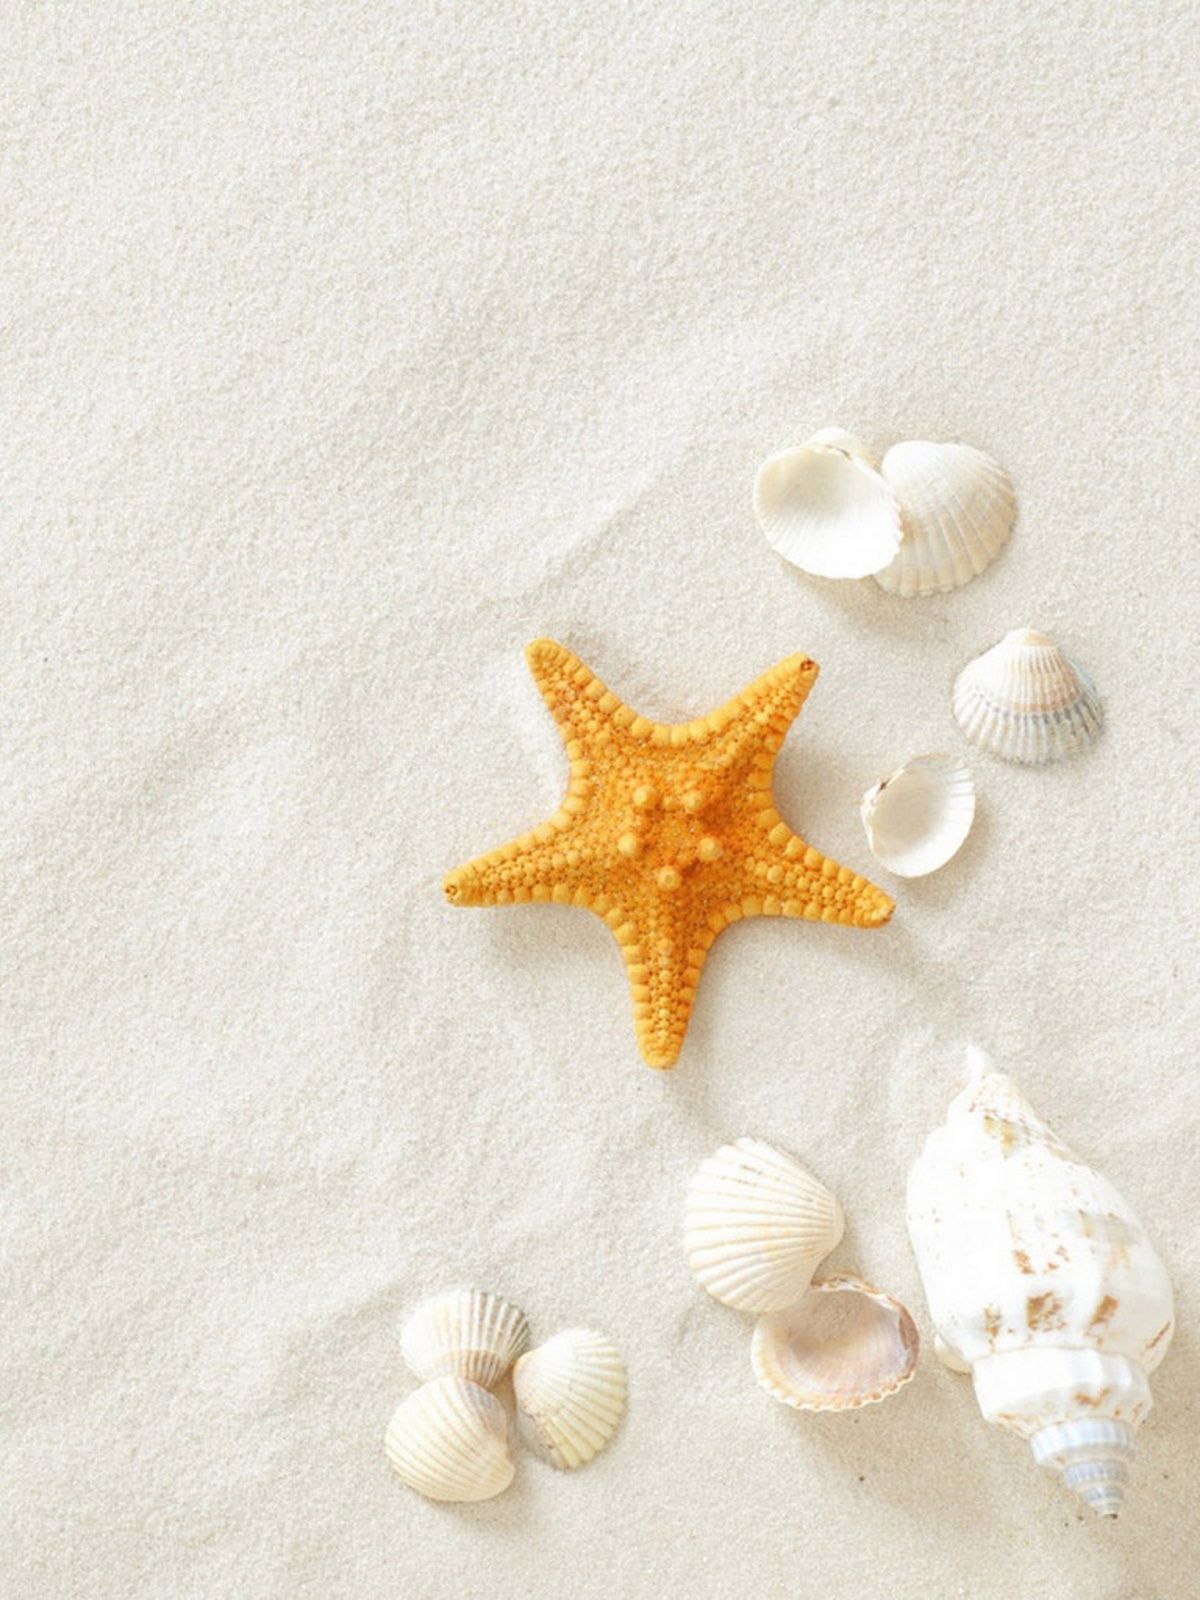 White Sand Starfish Clam Shells Mobile Wallpaper